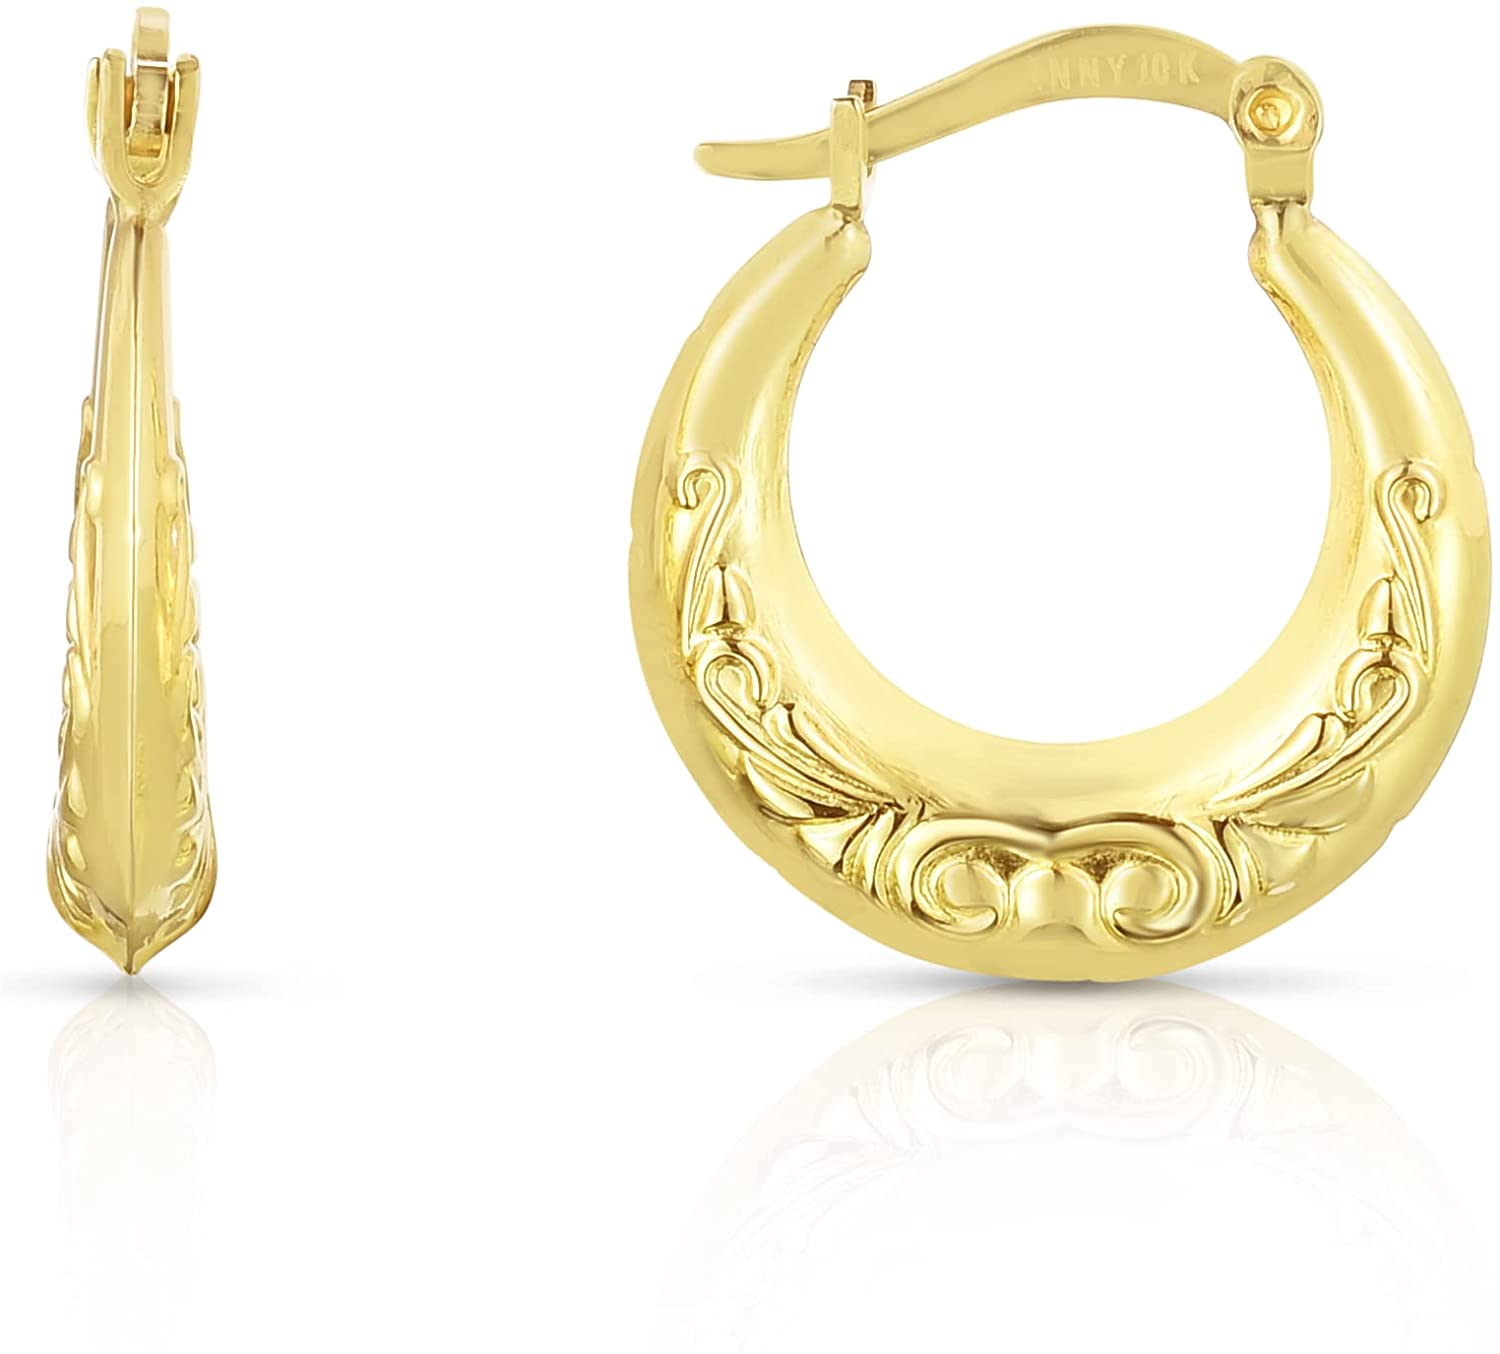 10k Yellow Gold High Polish with Royal Design Hoop Earrings